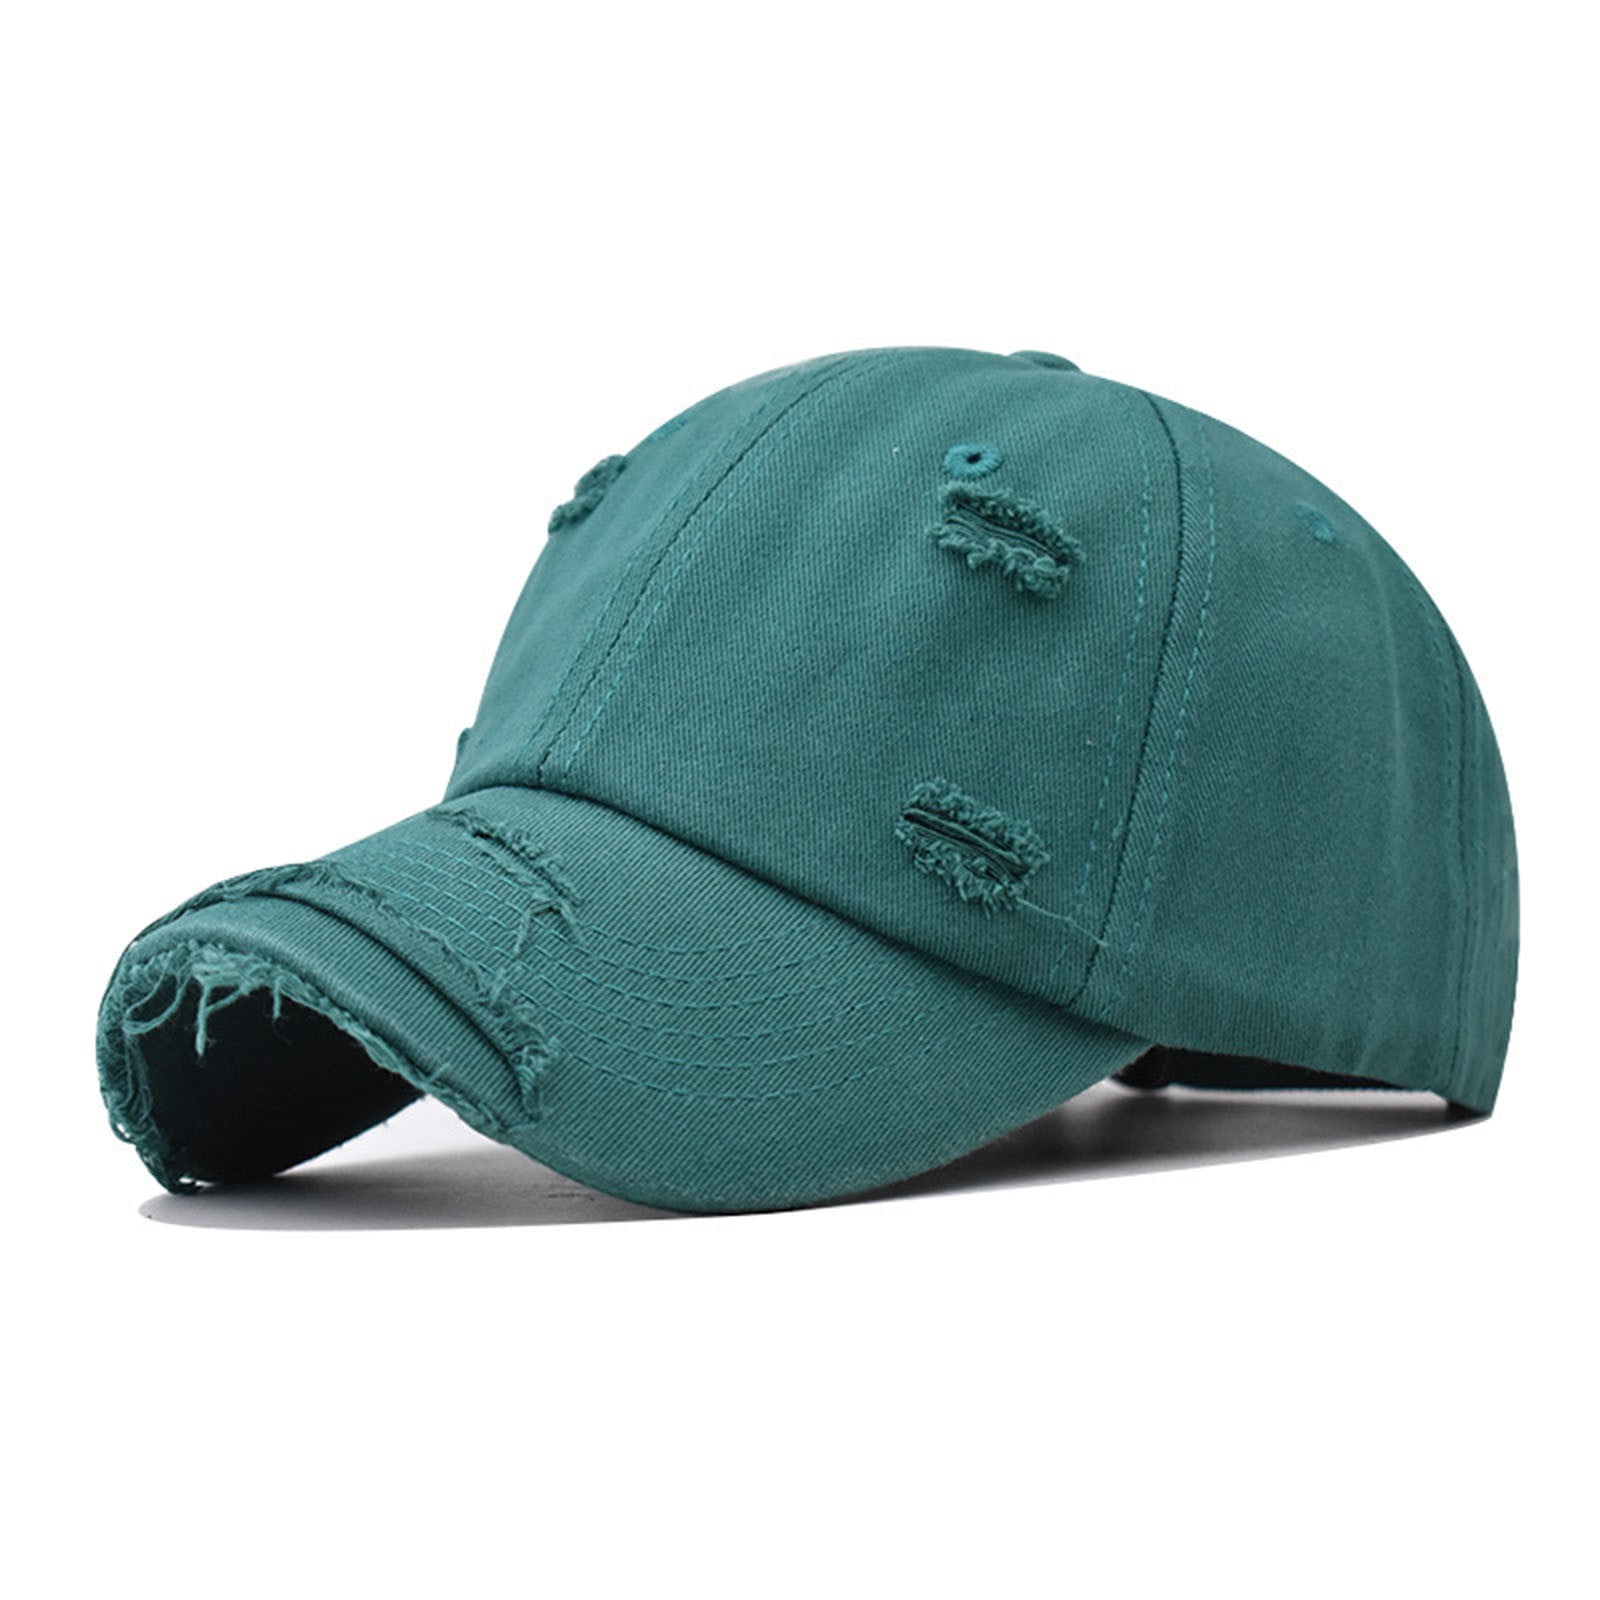 Sksloeg Hats for Men Personalized Adjustable Trucker Caps Casual